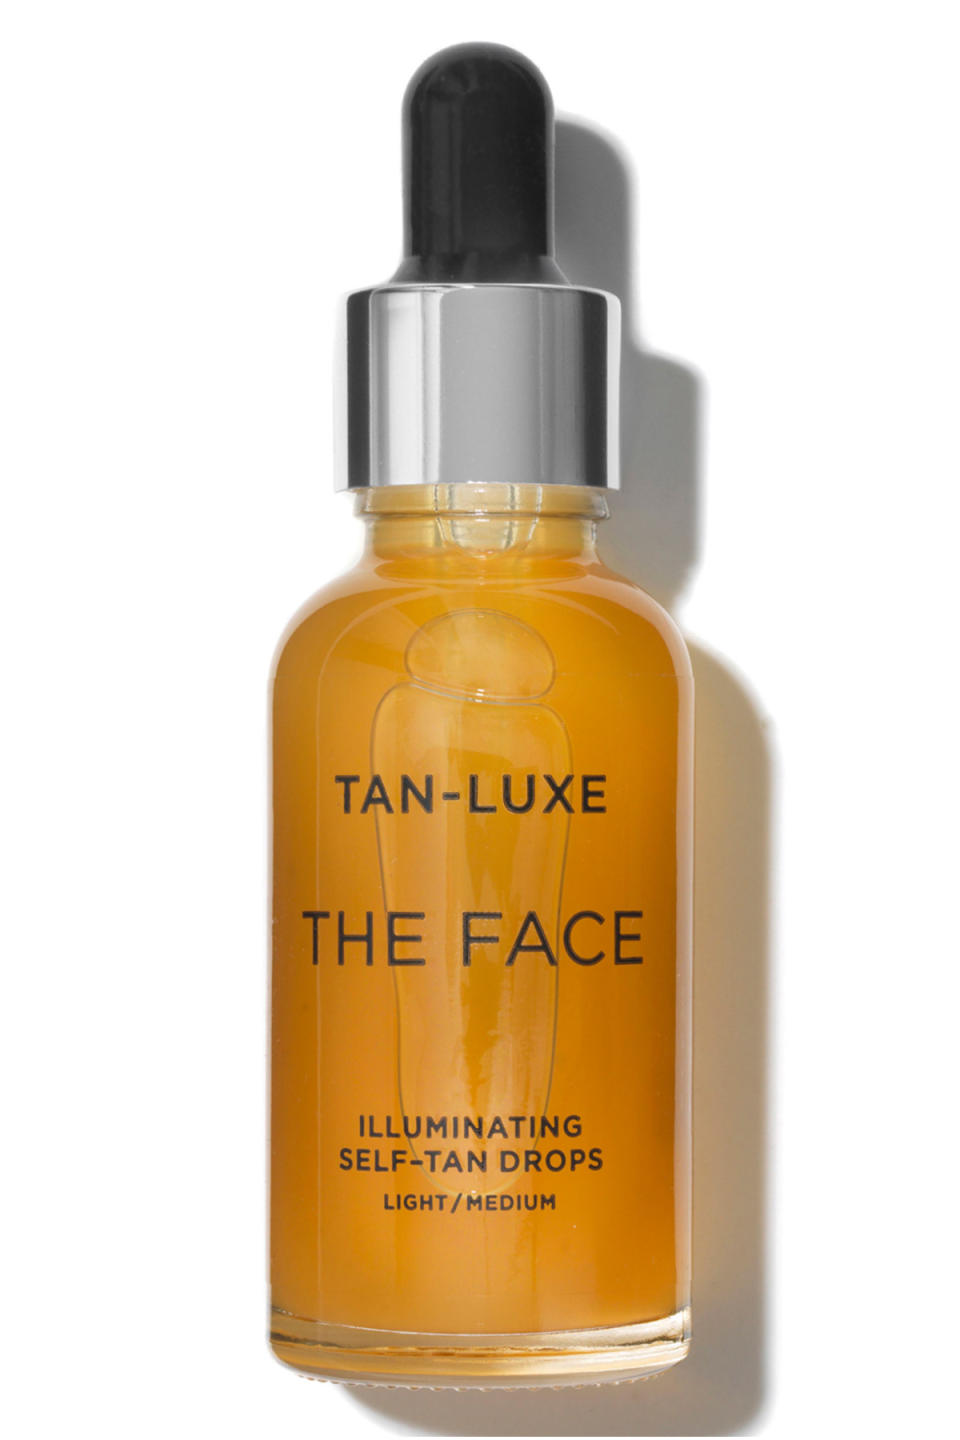 Tan-Luxe The Face Illuminating Self-Tan Drops